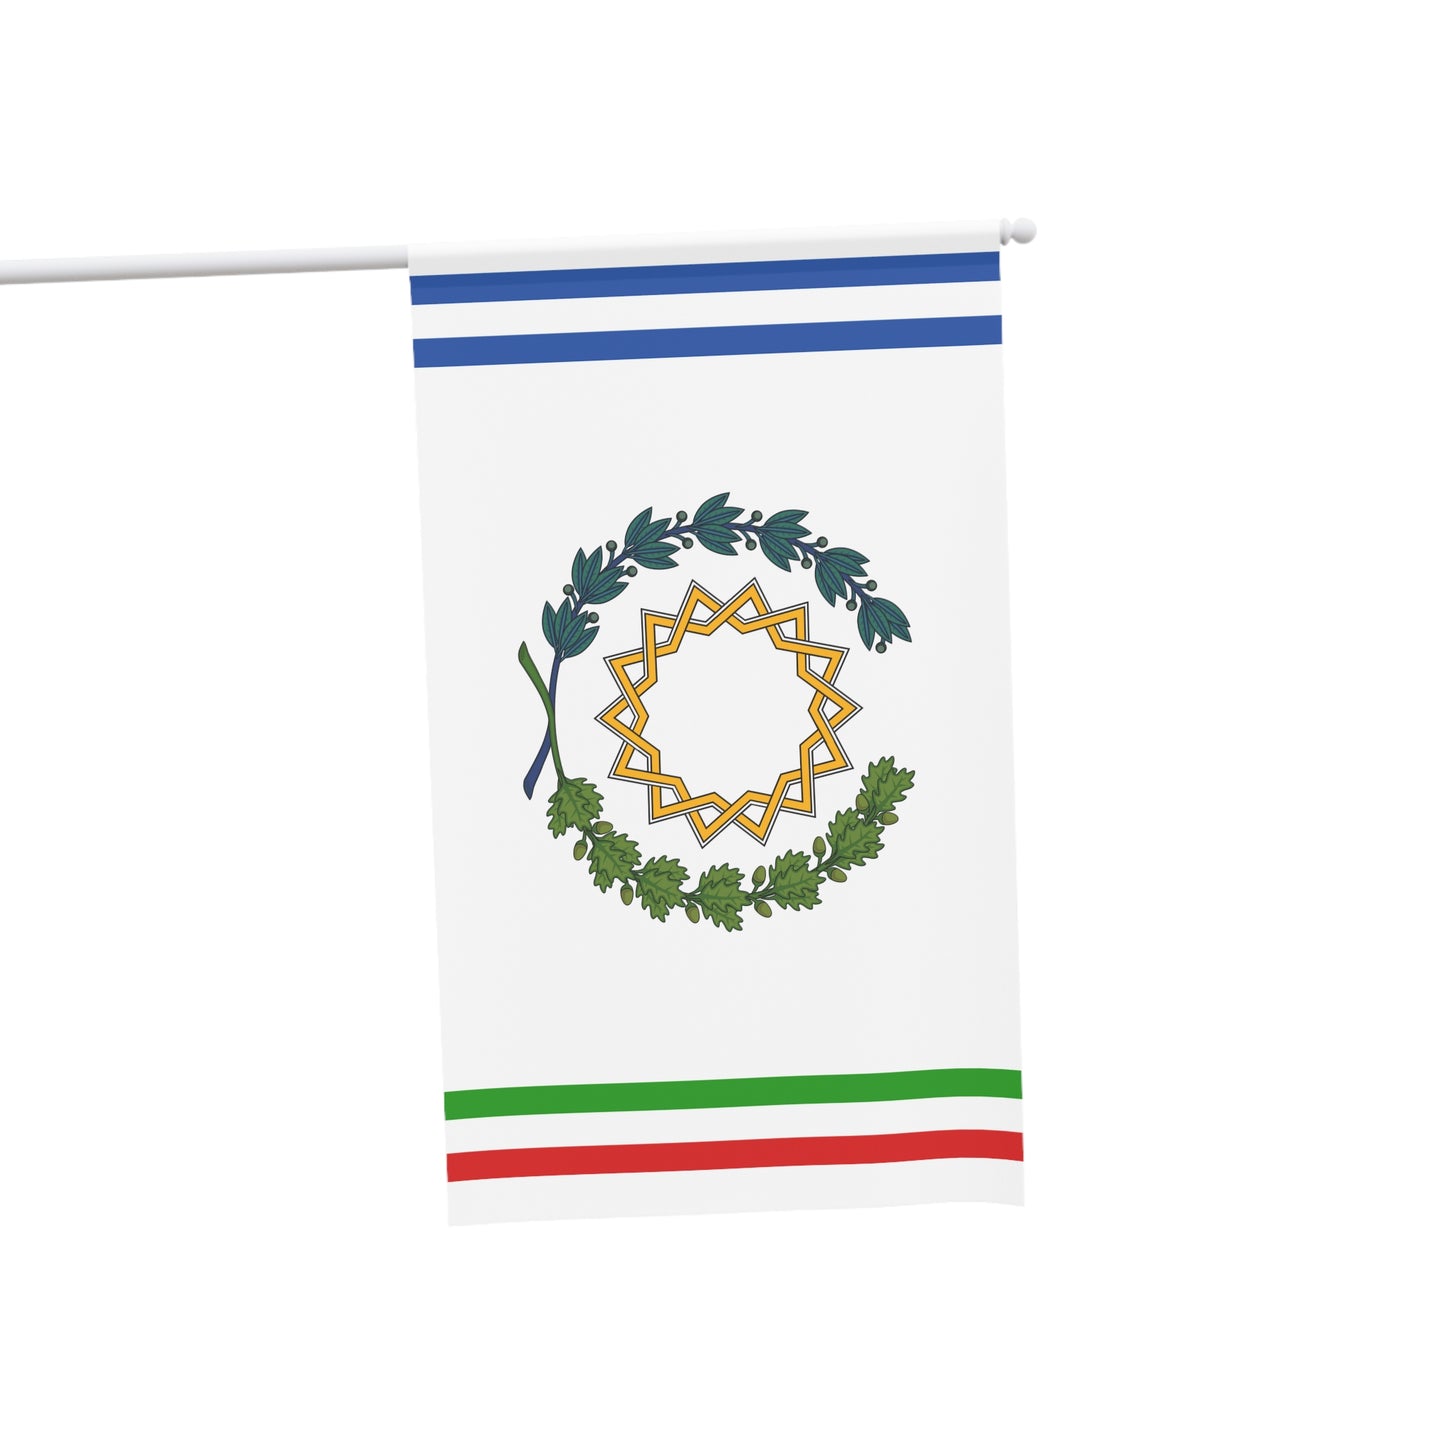 Iranian-Israeli Solidarity Flag (Ceremonial)